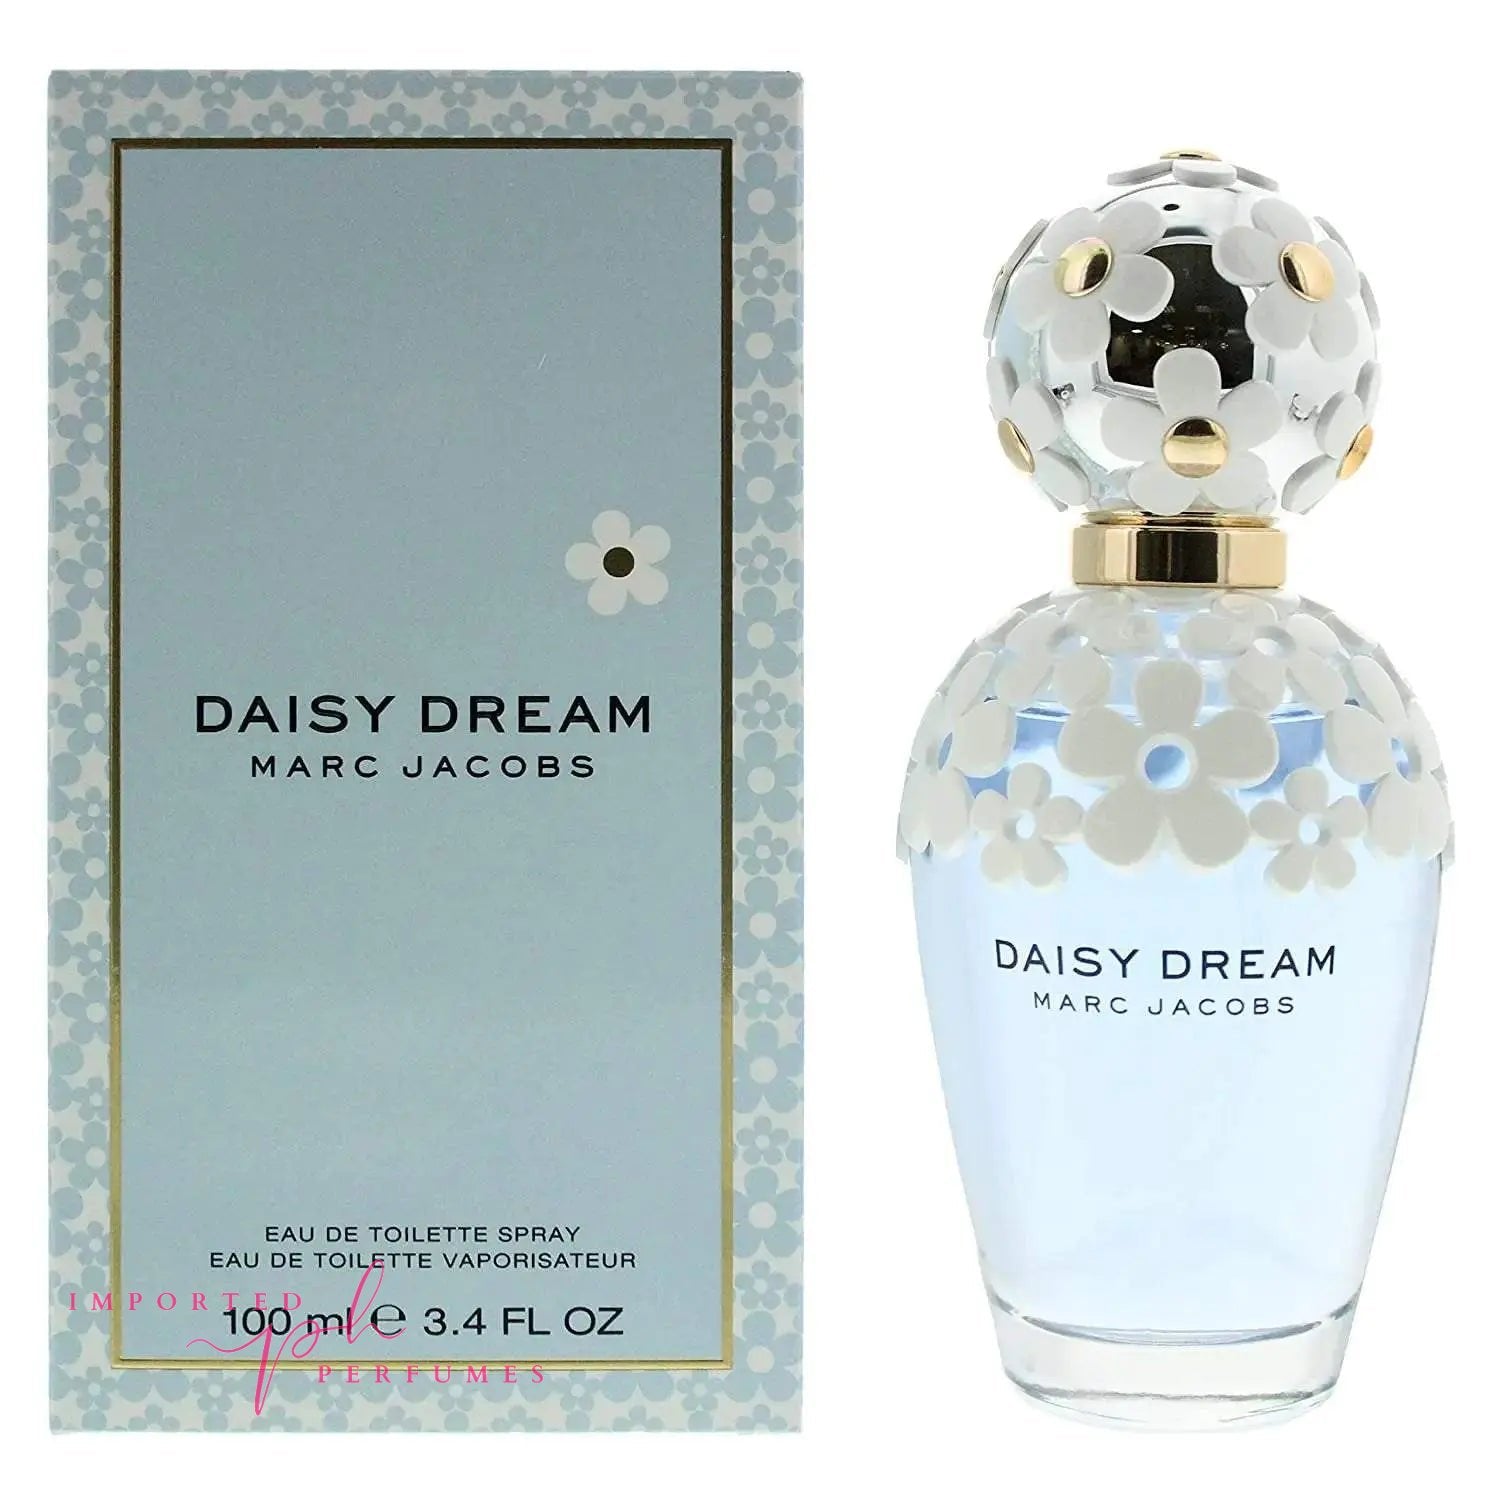 [TESTER] Marc Jacobs Daisy Dream Eau de Toilette For Women 100ml Imported Perfumes Co